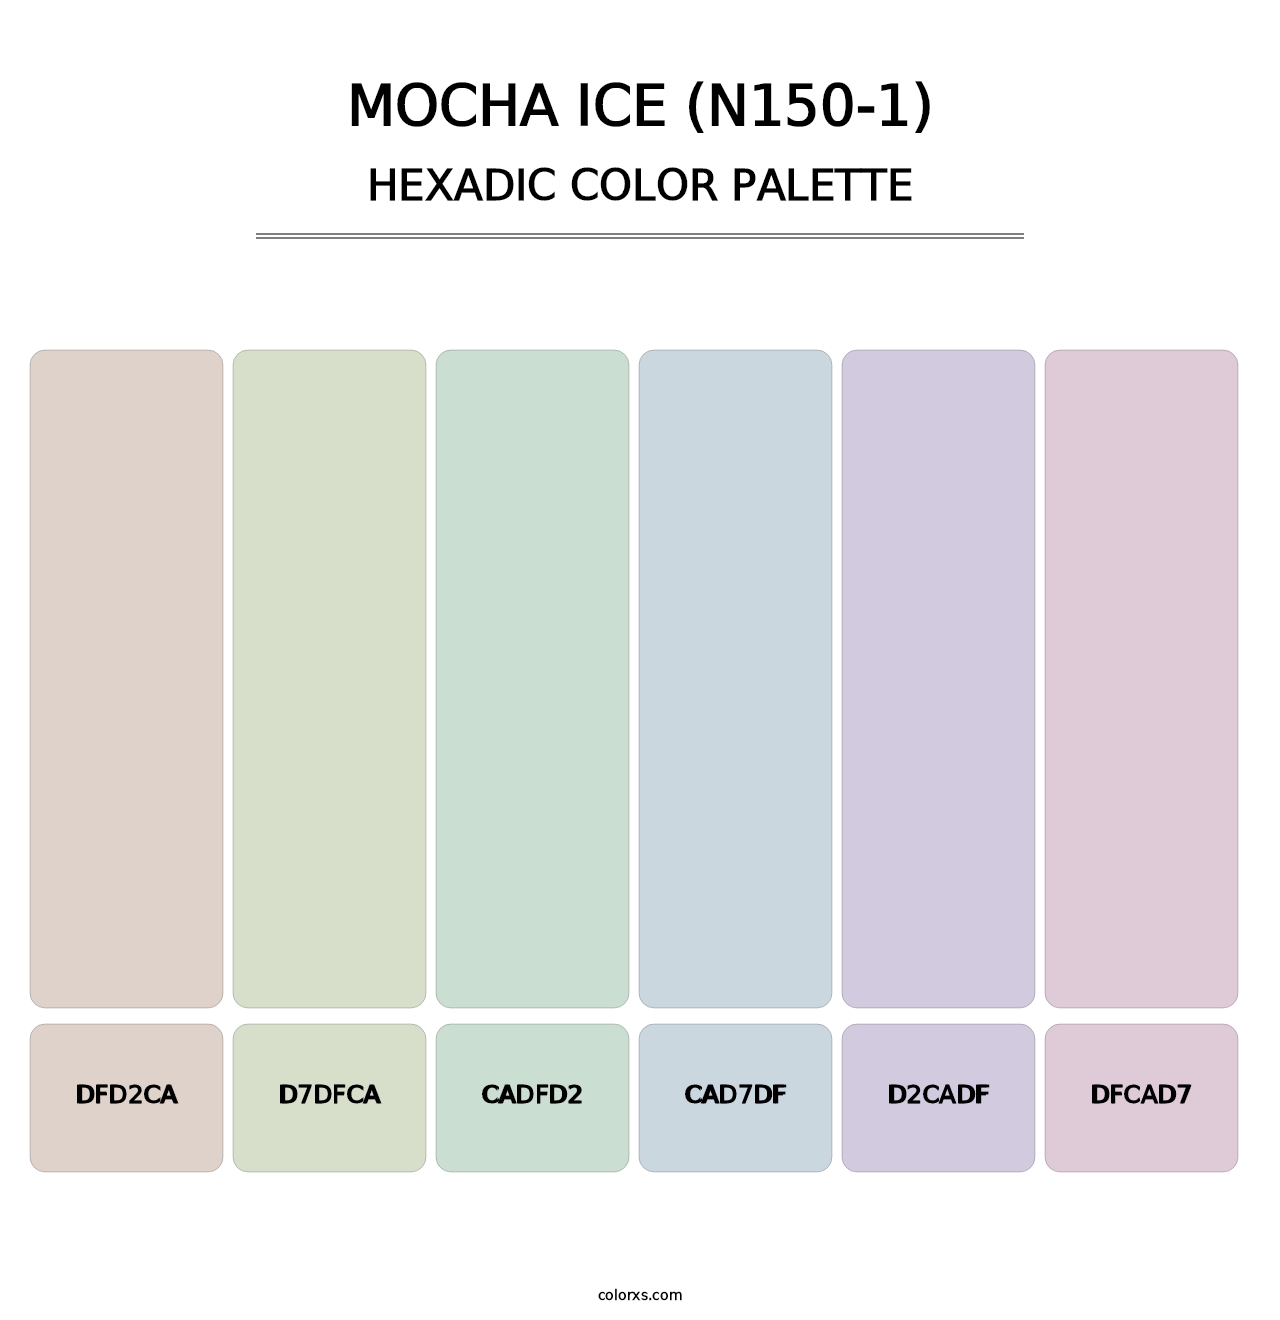 Mocha Ice (N150-1) - Hexadic Color Palette